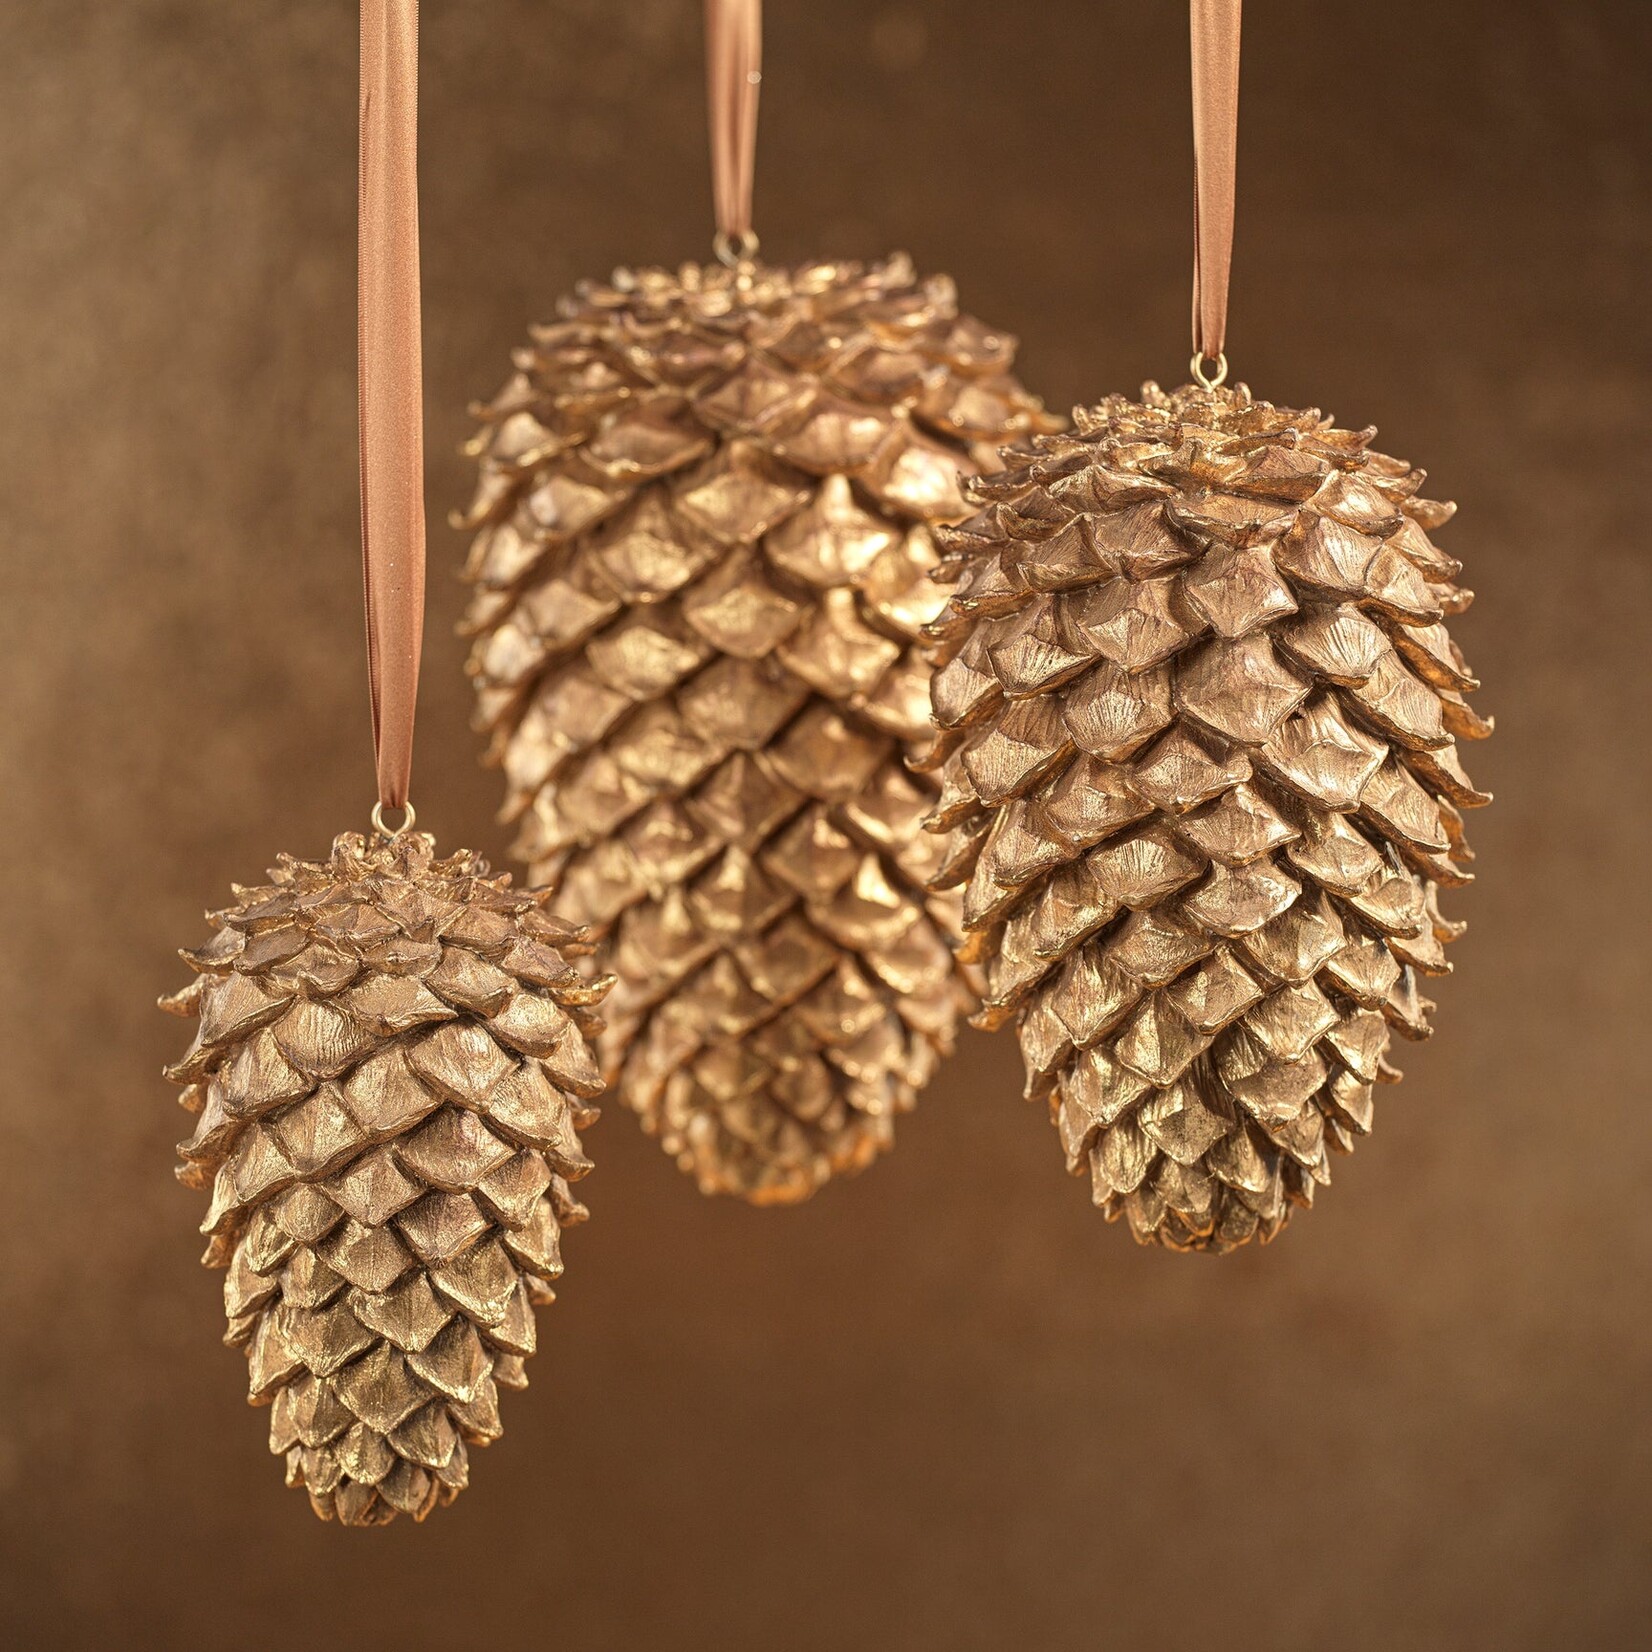 Zodax Decorative Golden Pine Cones